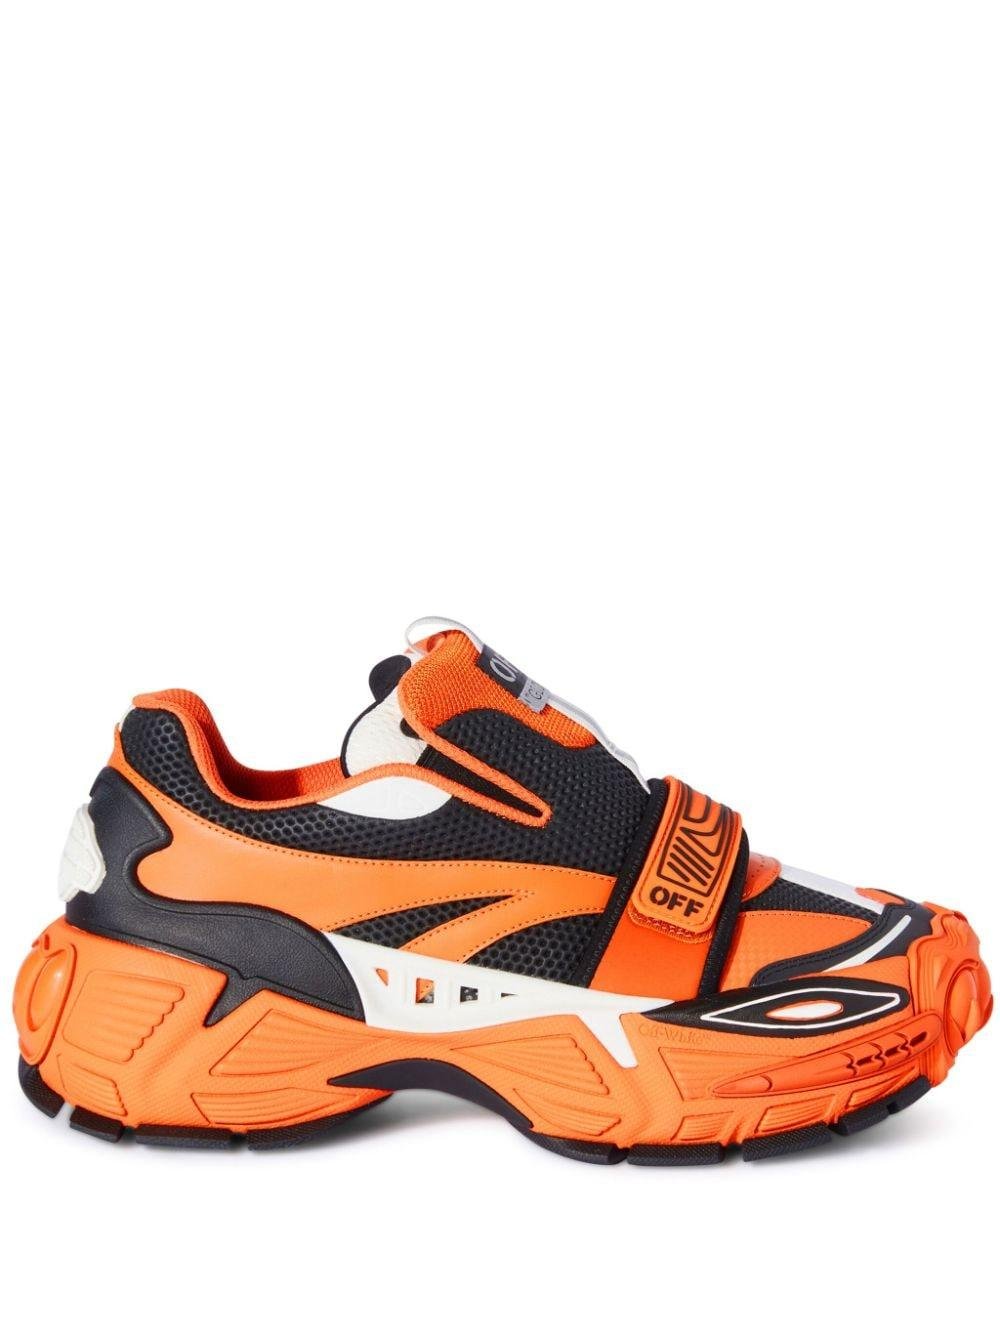 Off-White c/o Virgil Abloh Glove Slip-on Sneakers in Orange for Men